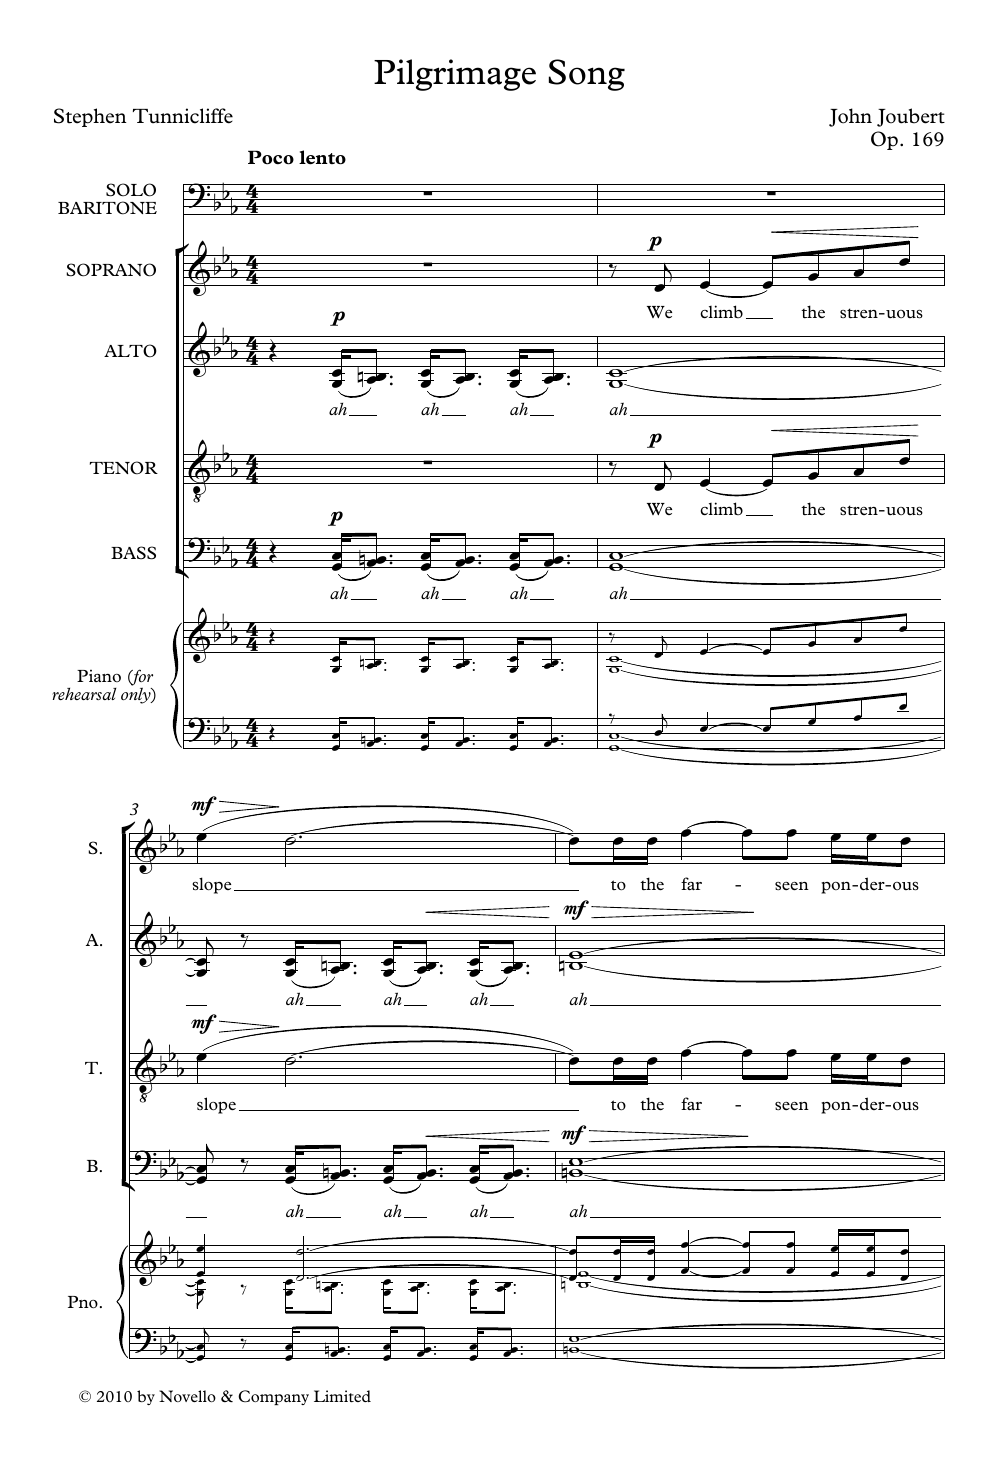 John Joubert Pilgrimage Song sheet music notes and chords arranged for Choir